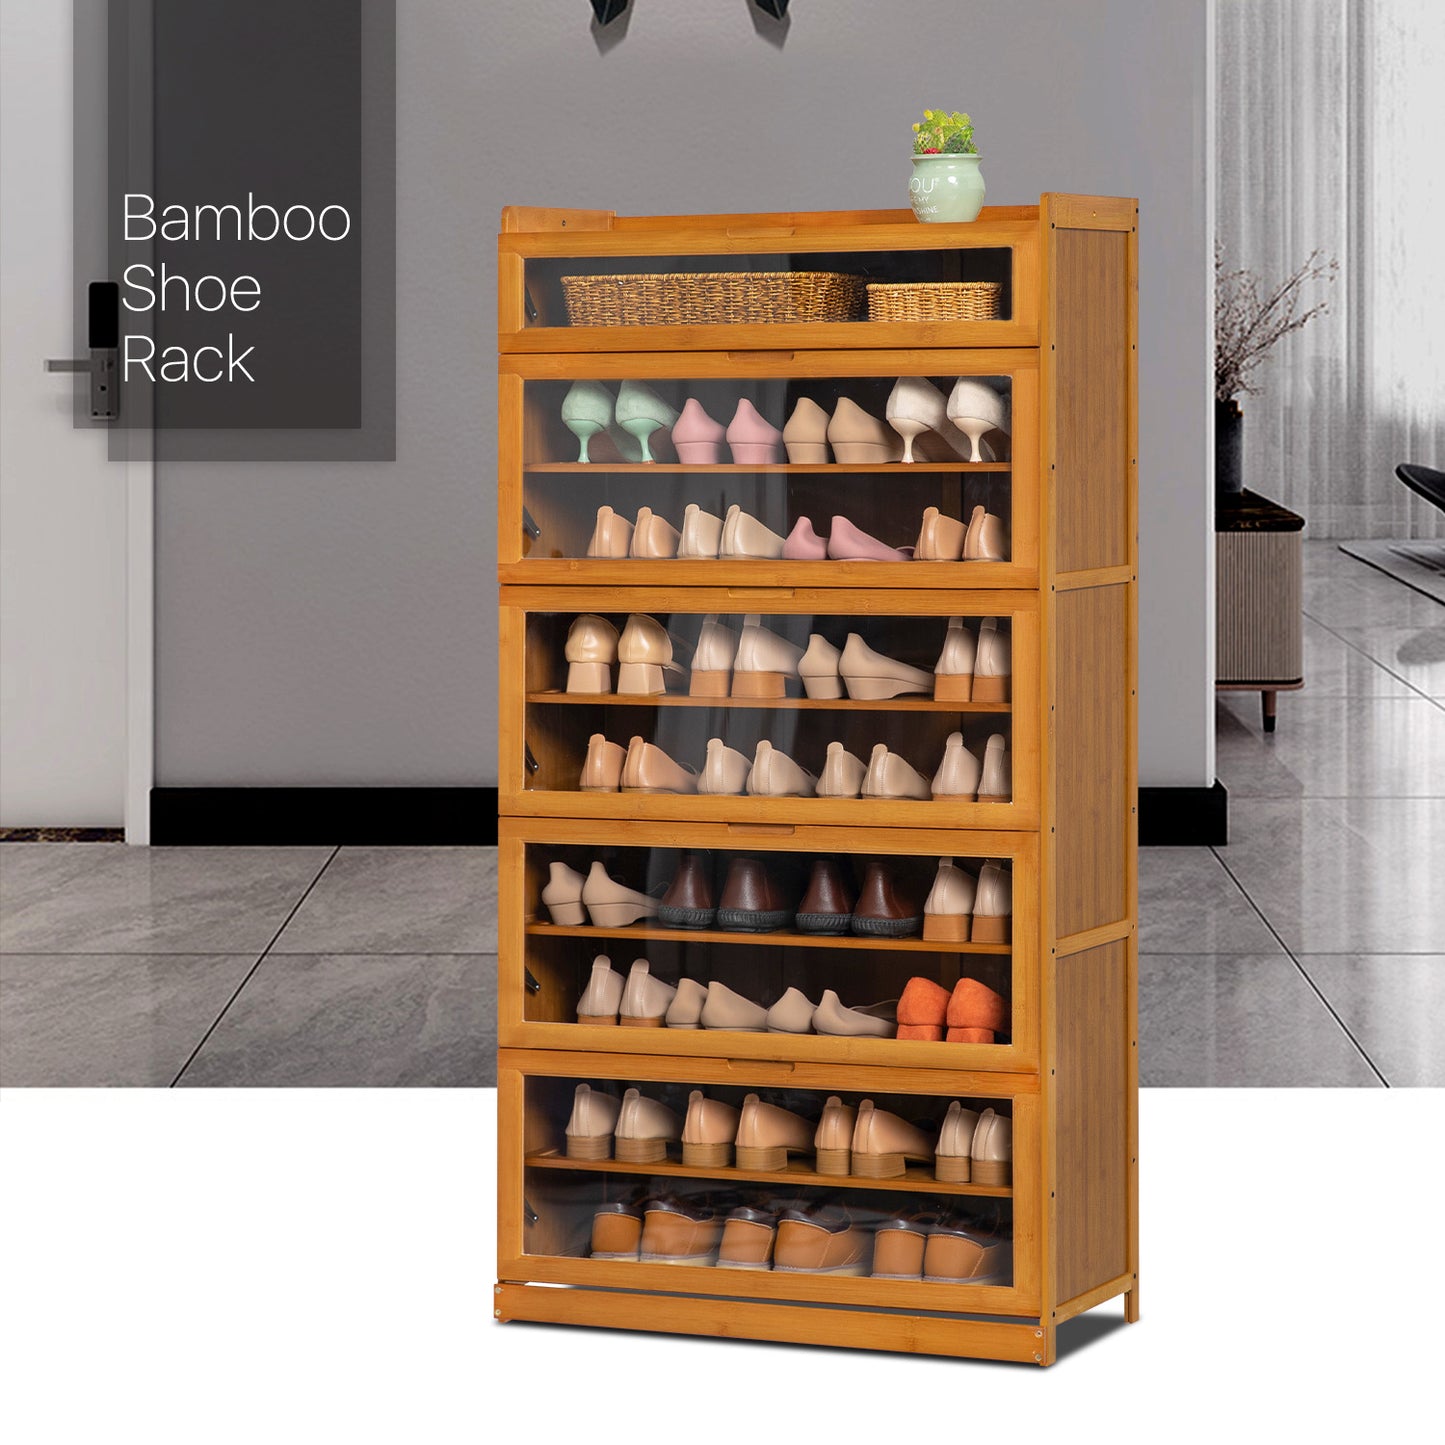 Visible Drop Down Door Shoe Organizer - Bamboo/Acrylic - Brown